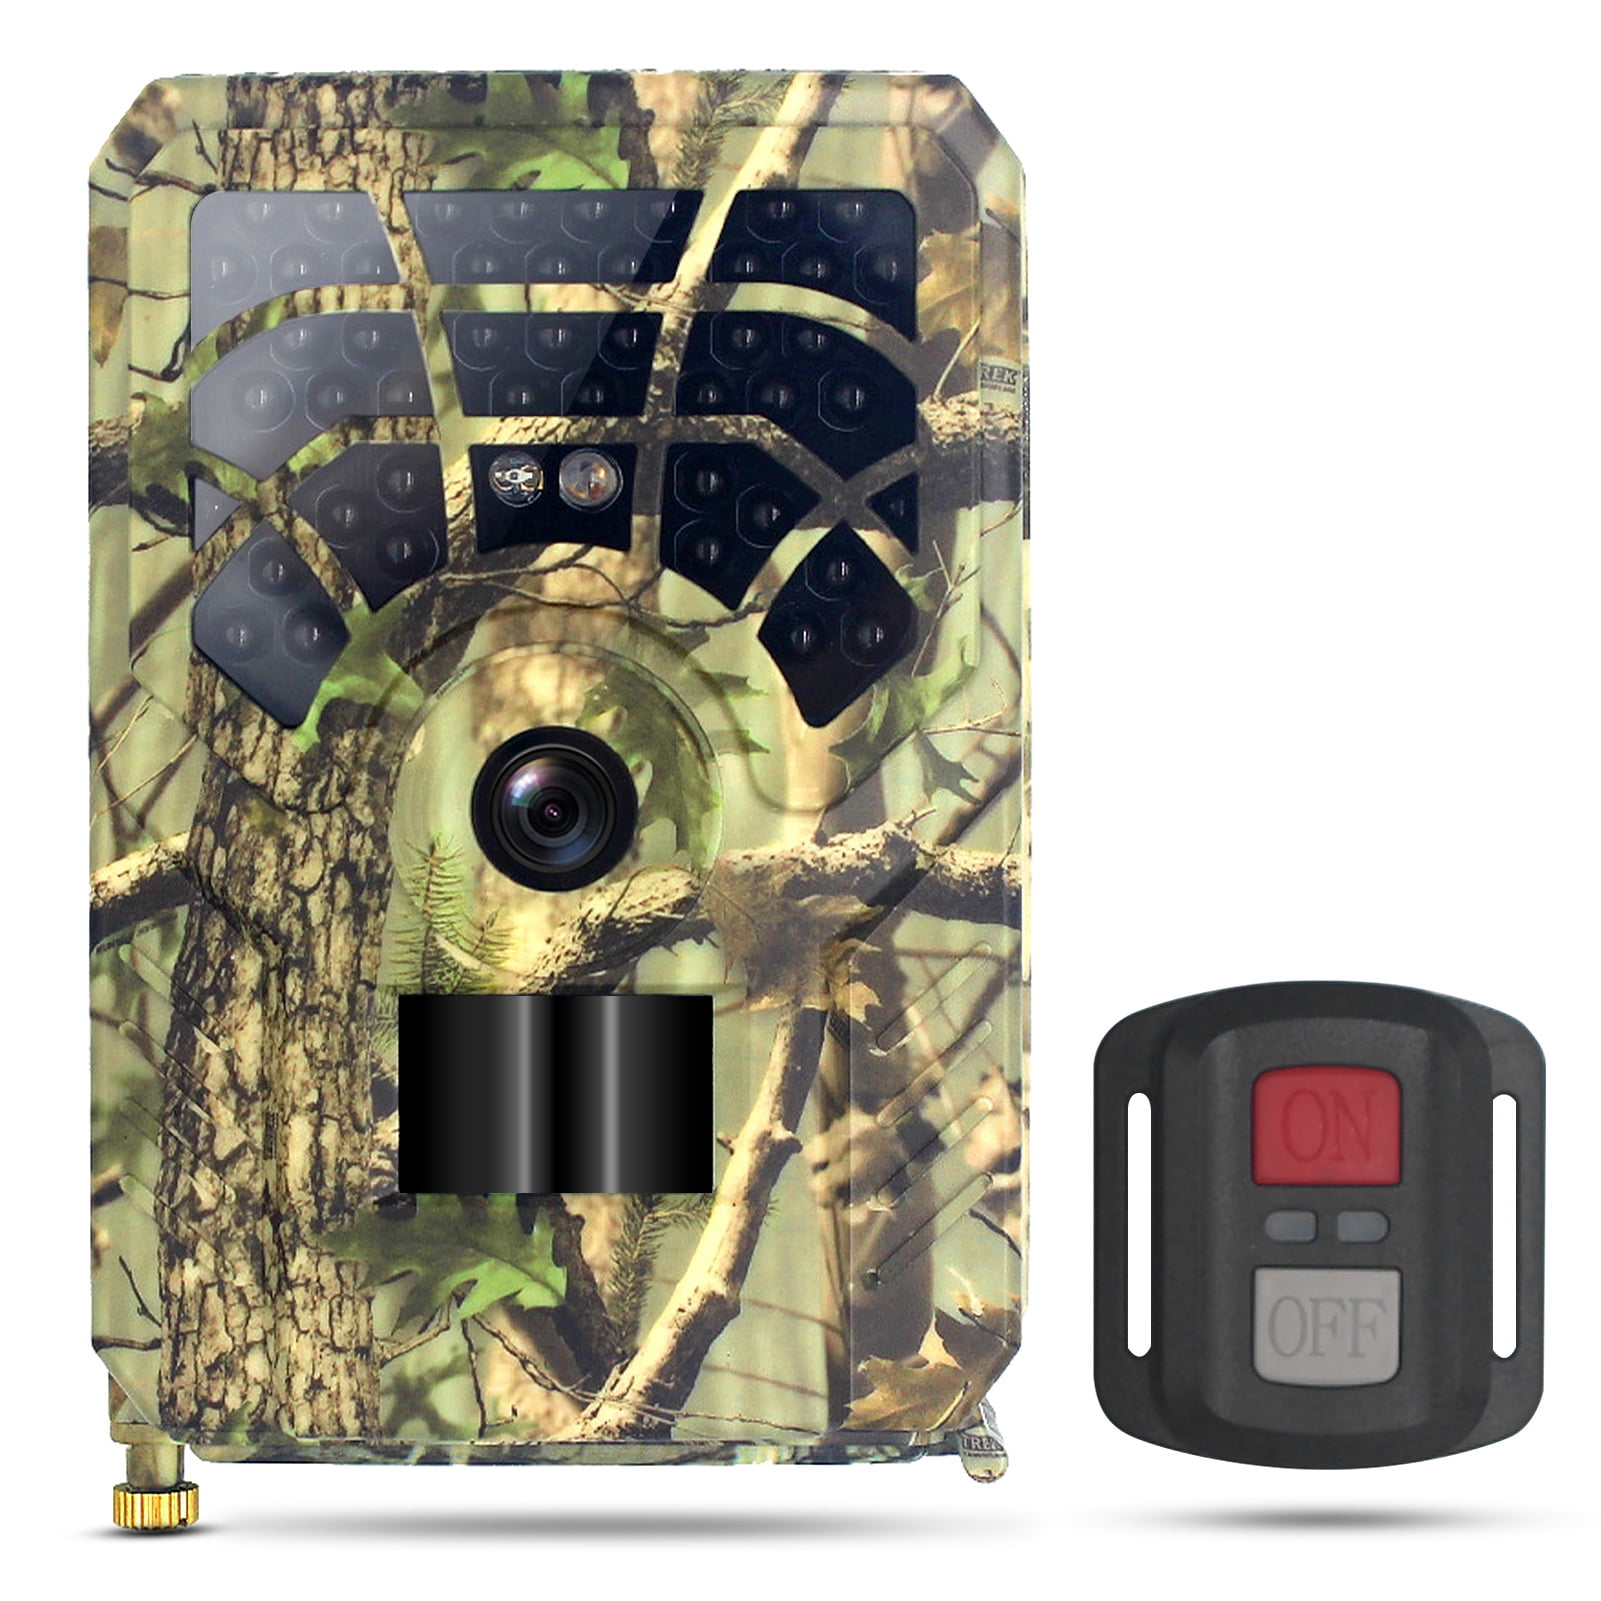 2pcs Trail Game Camera 18MP Hunting Wildlife Cam PIR Night Vision Home Security 